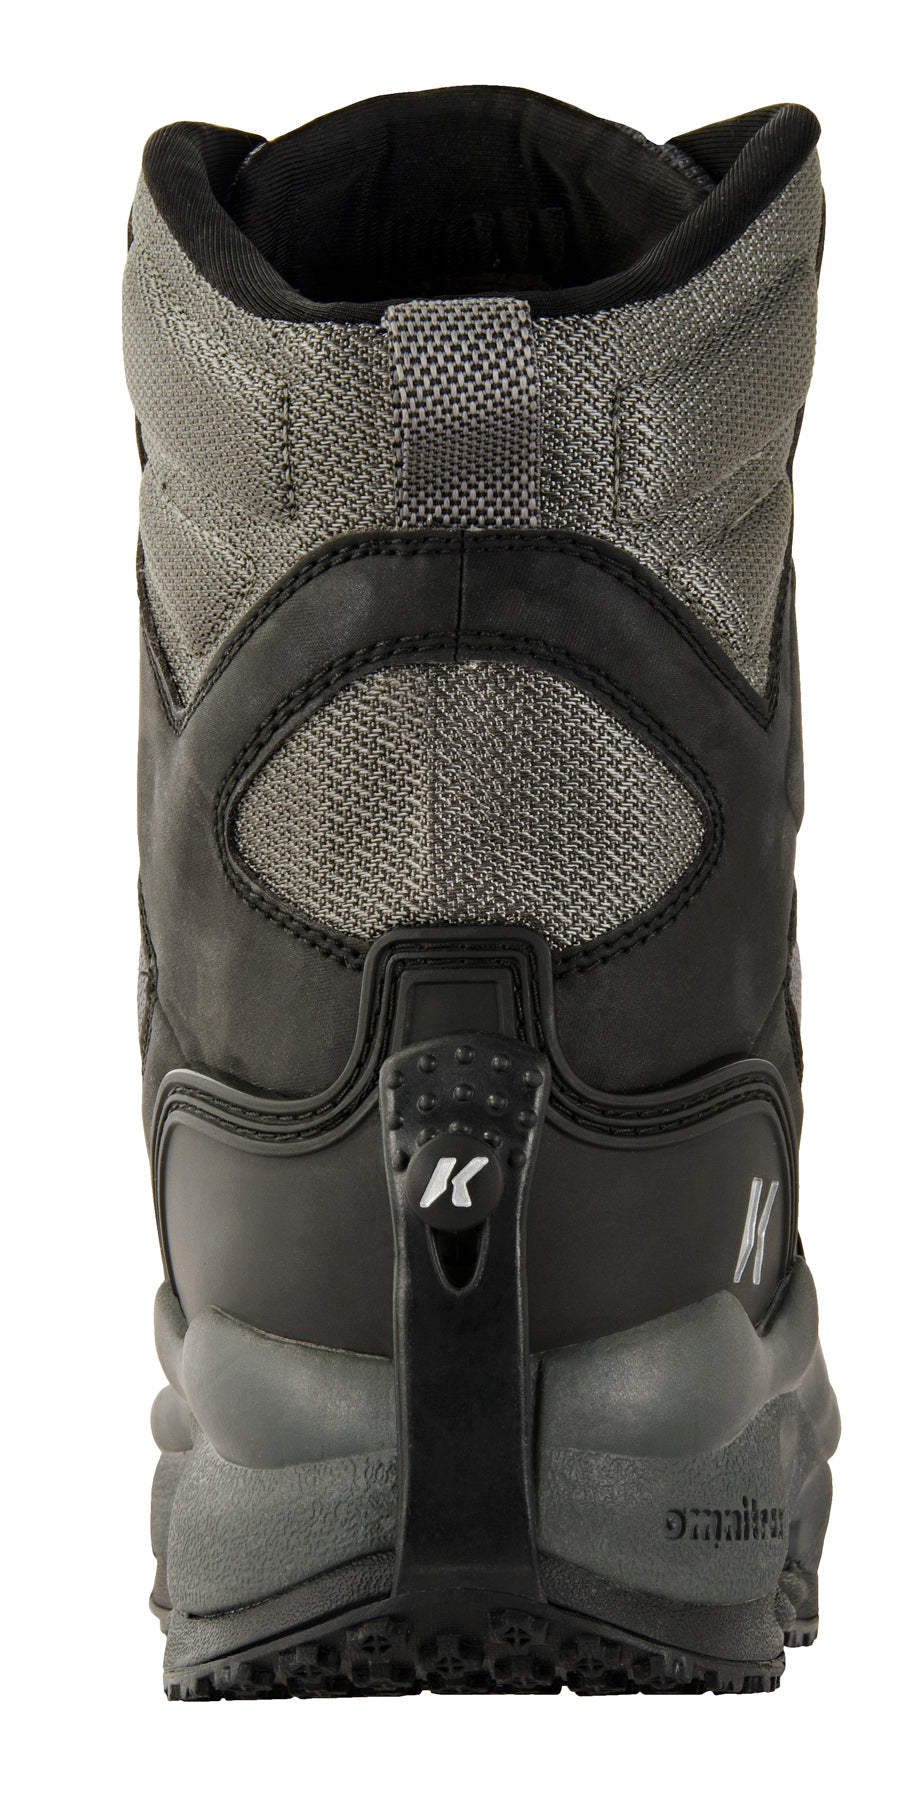 KorKers Wading Boots Darkhorse™